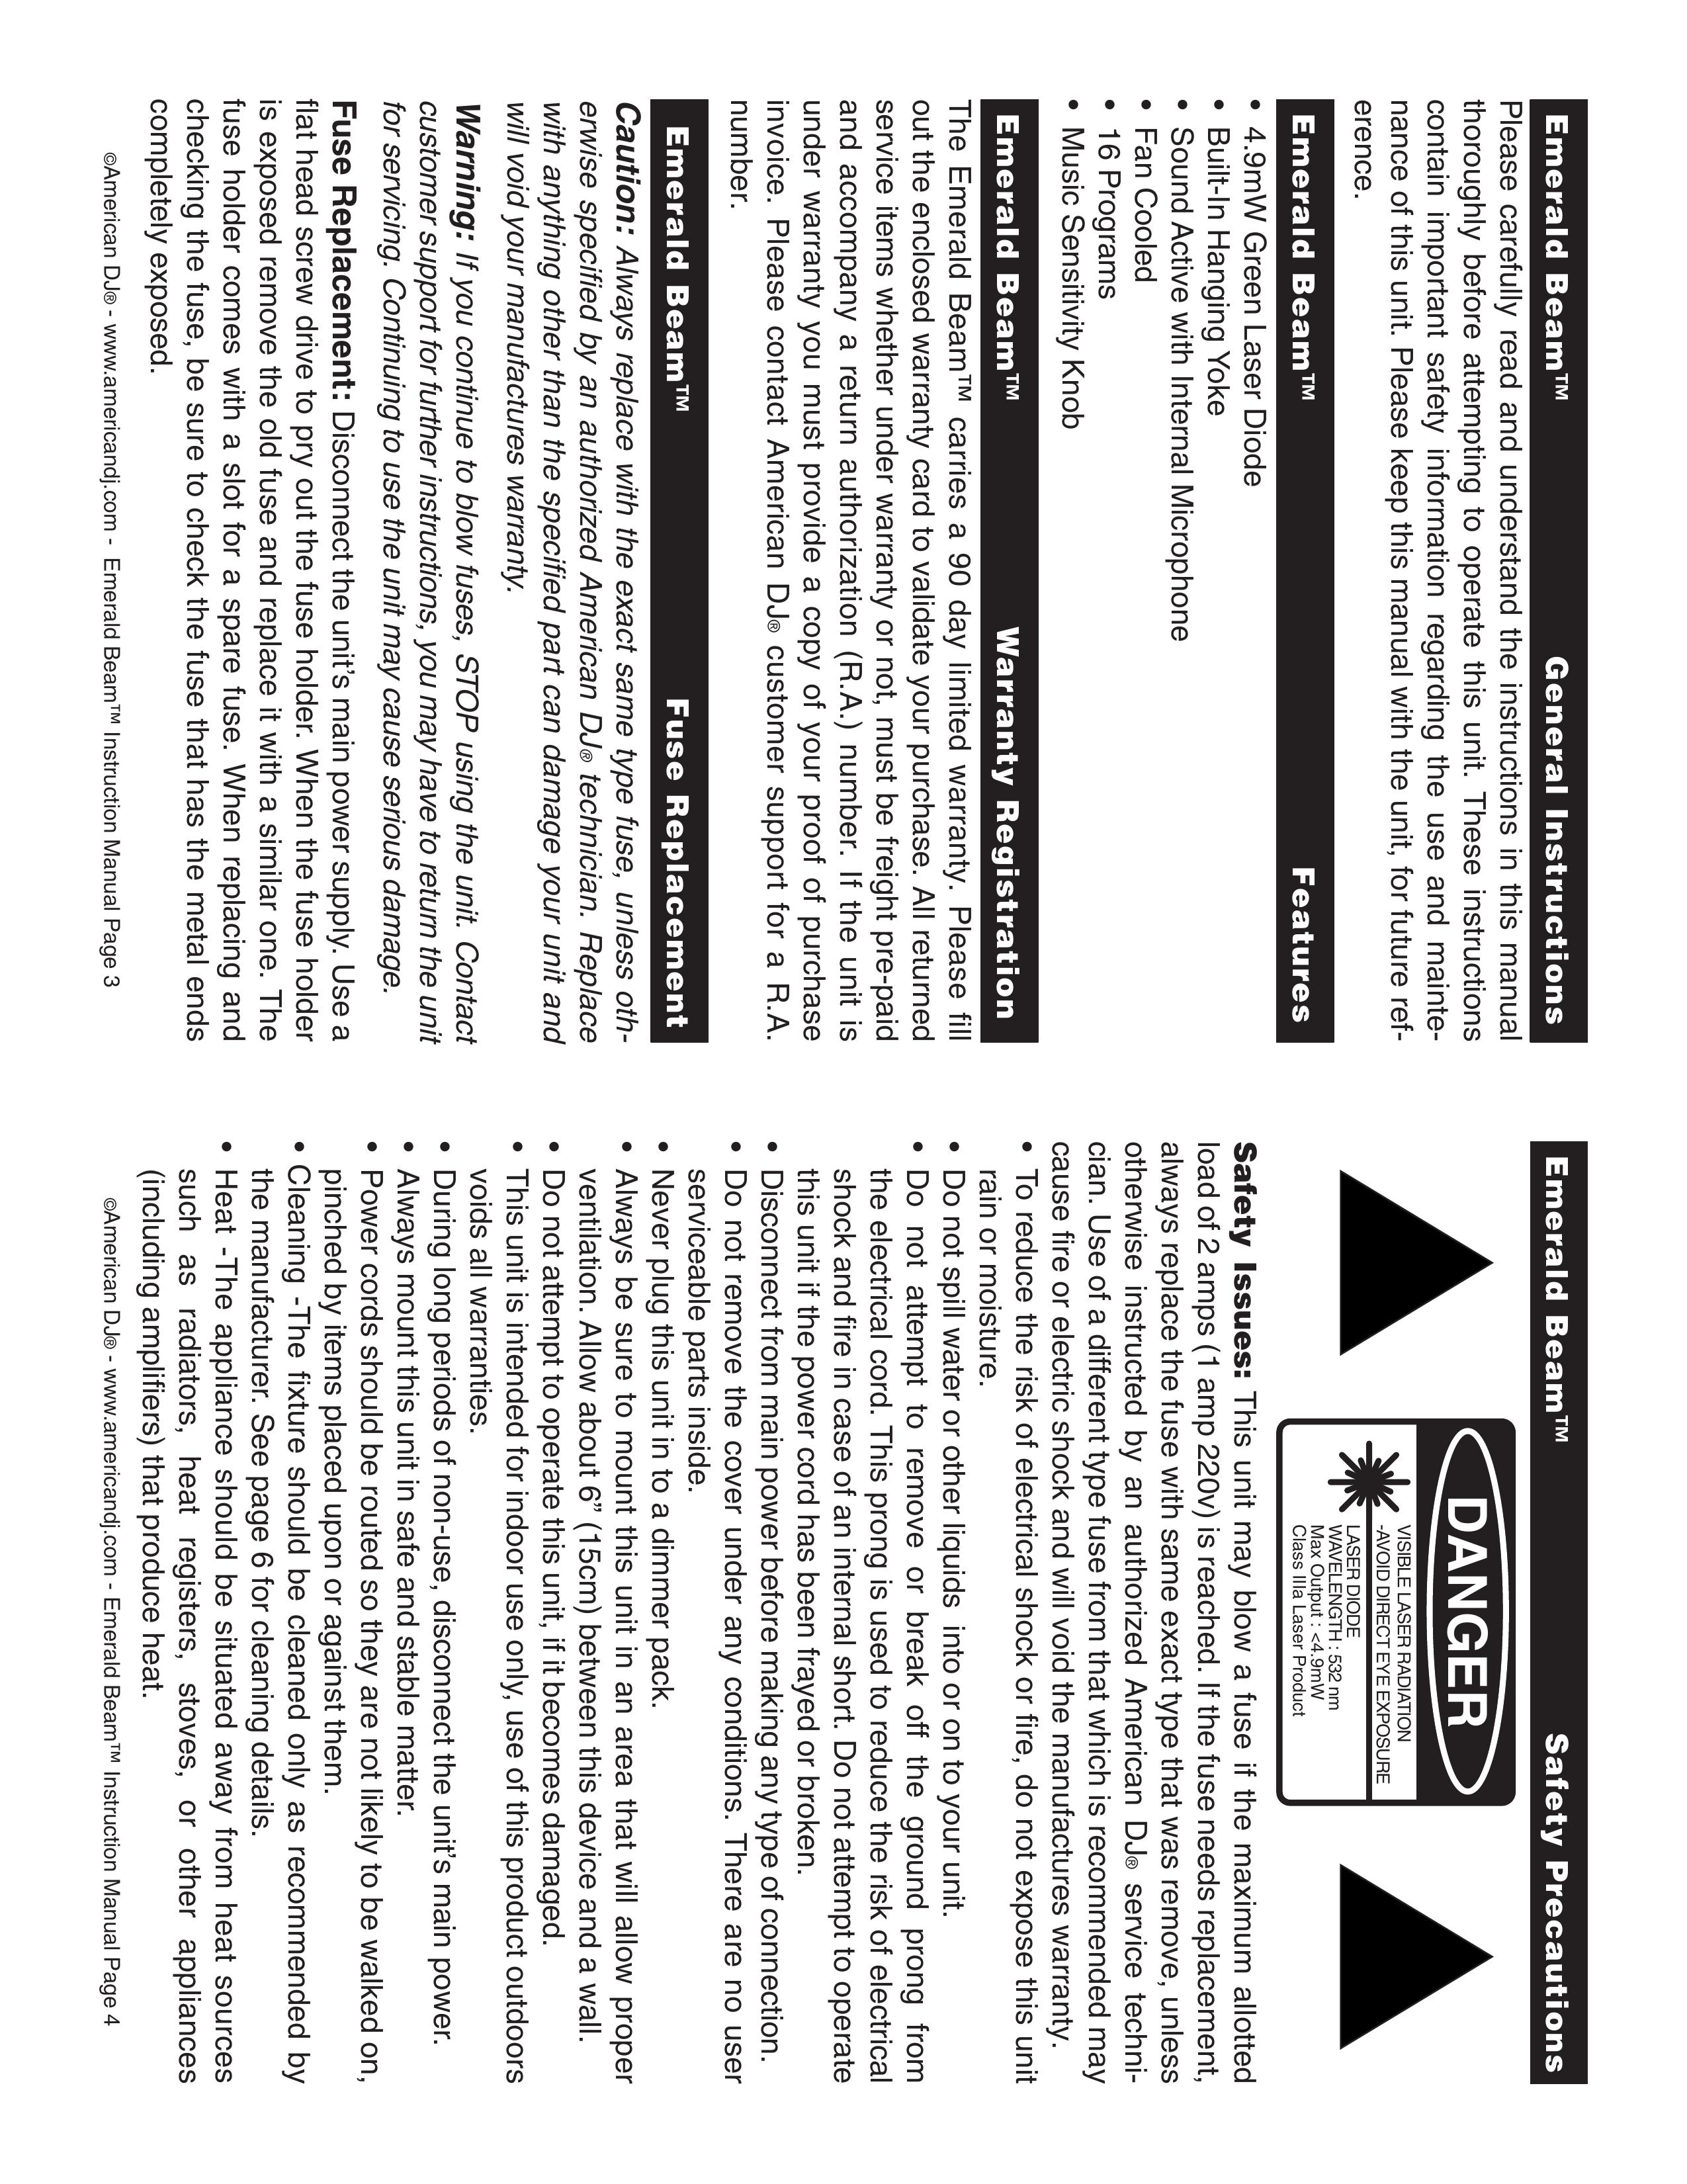 American DJ Emrald Beam DJ Equipment User Manual (Page 2)